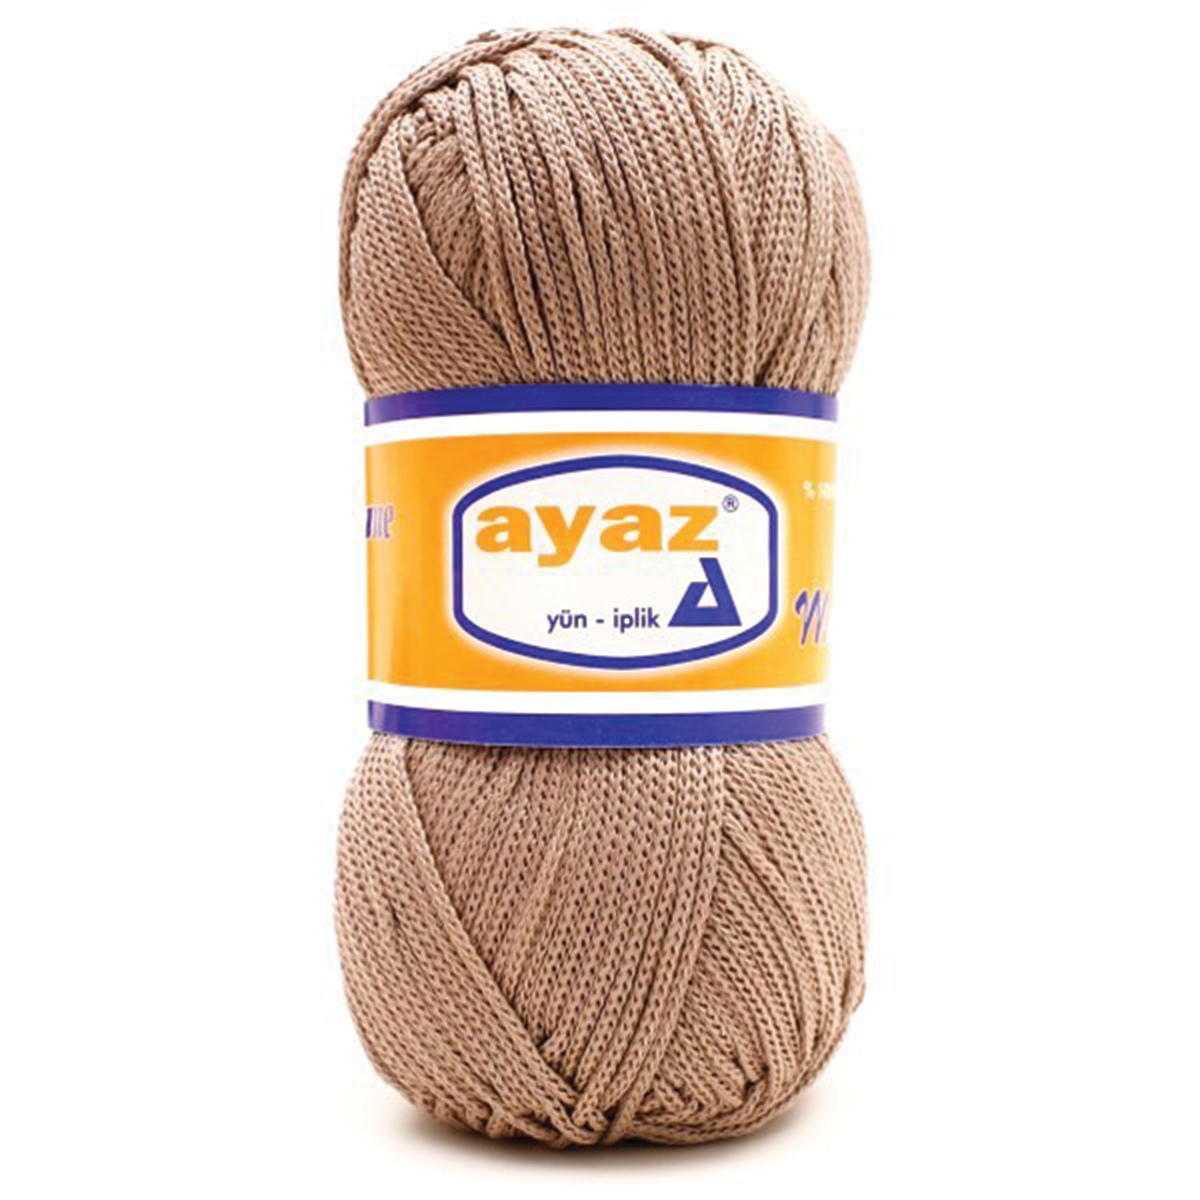 Macrame yarn for bags